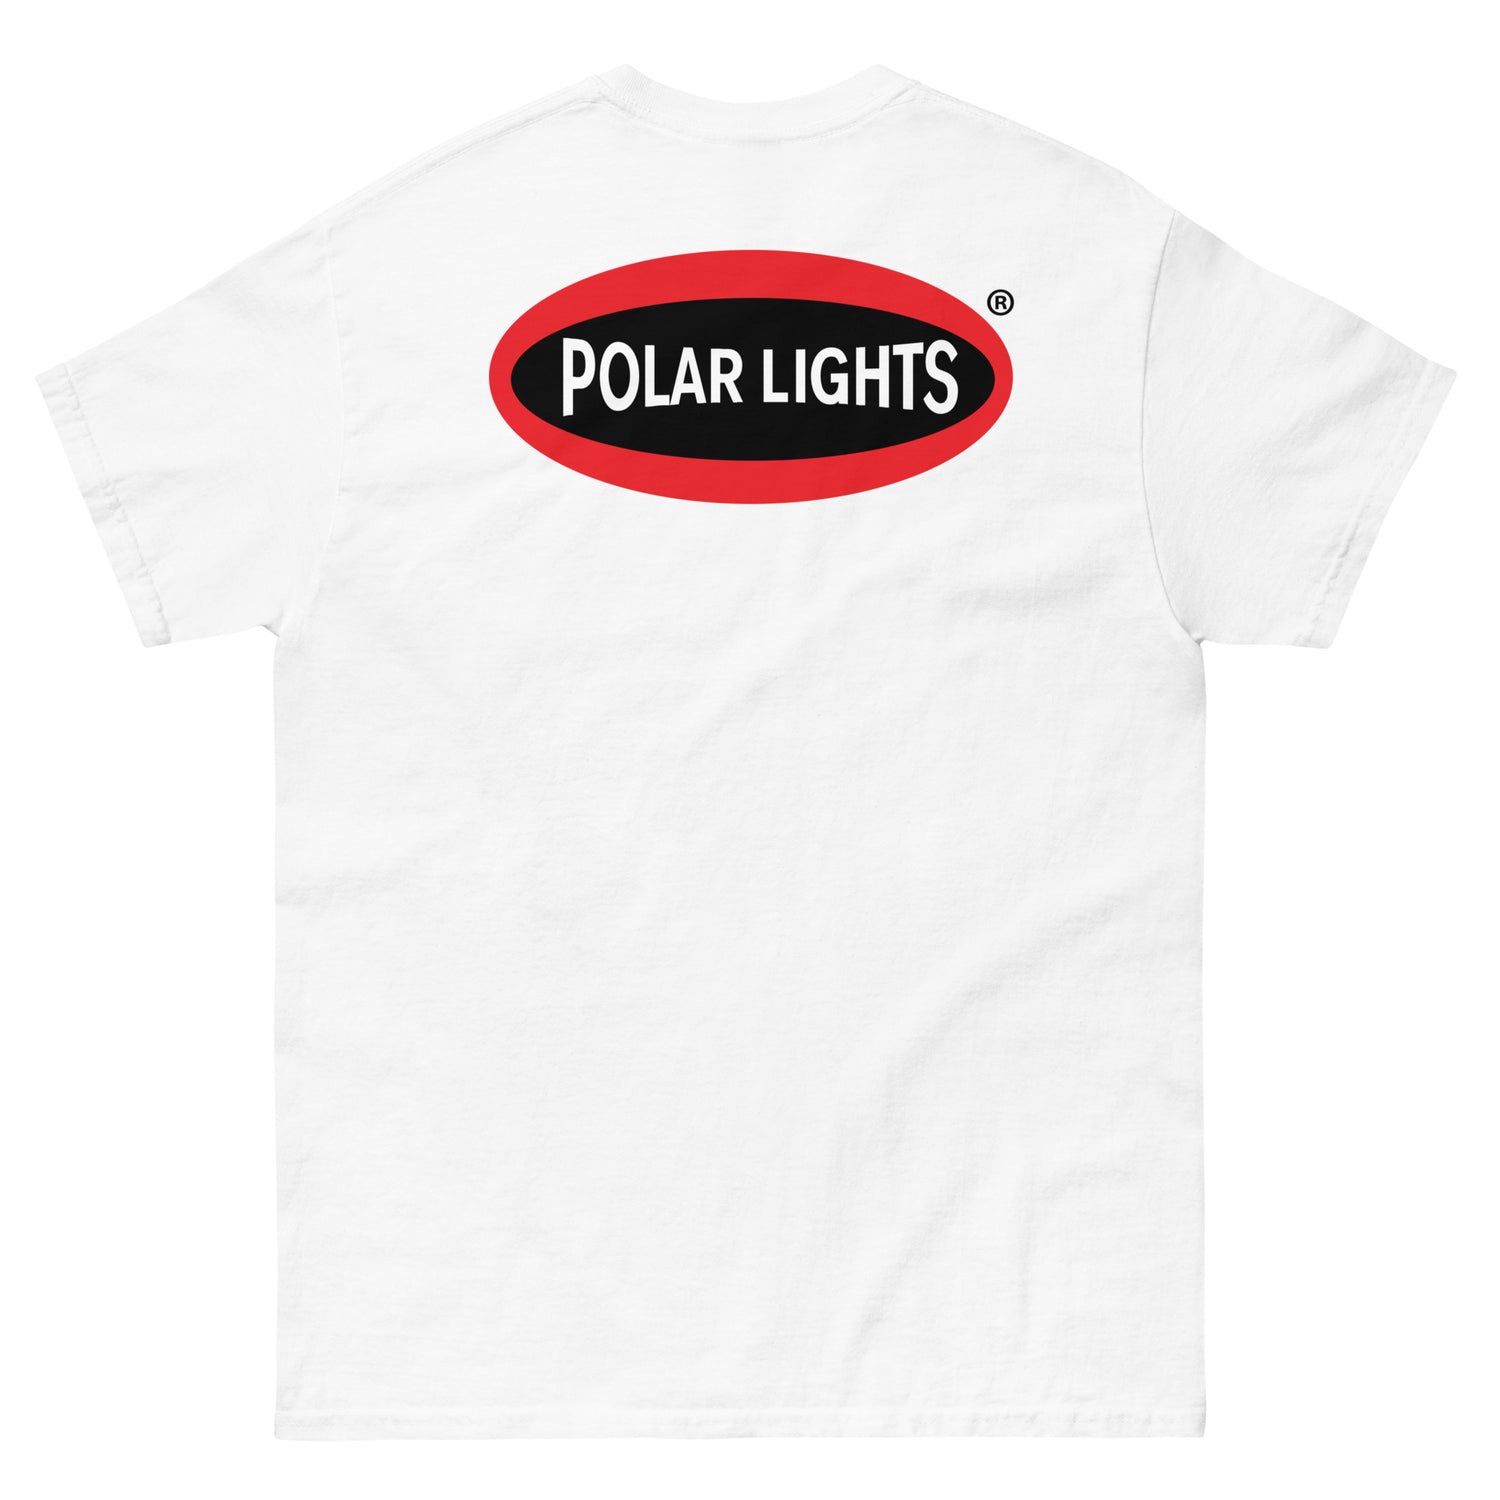 POLAR LIGHTS LOGO PRINTED T-SHIRT (FRONT AND BACK)